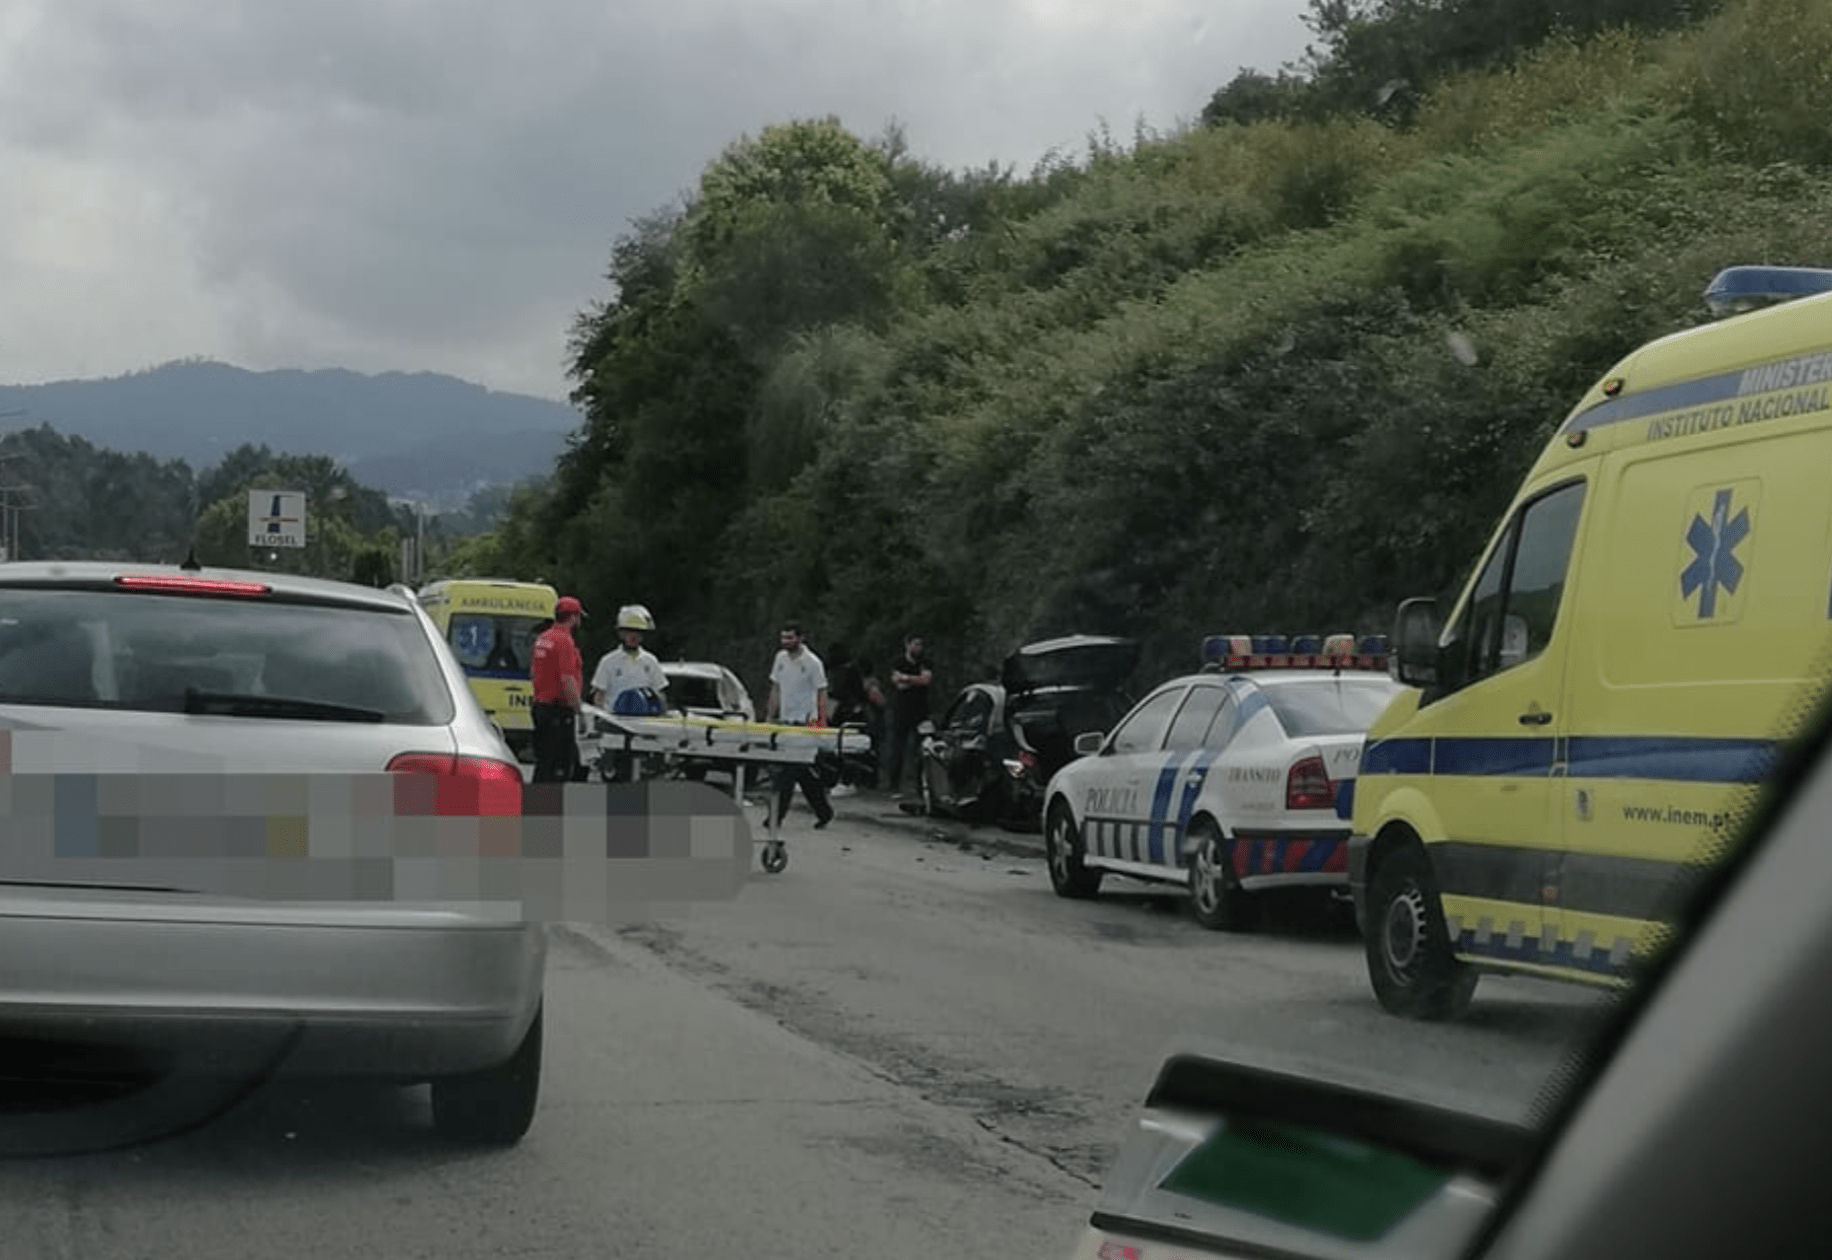 ? Cinco feridos em "carambola" de carros na Circular Urbana de Braga